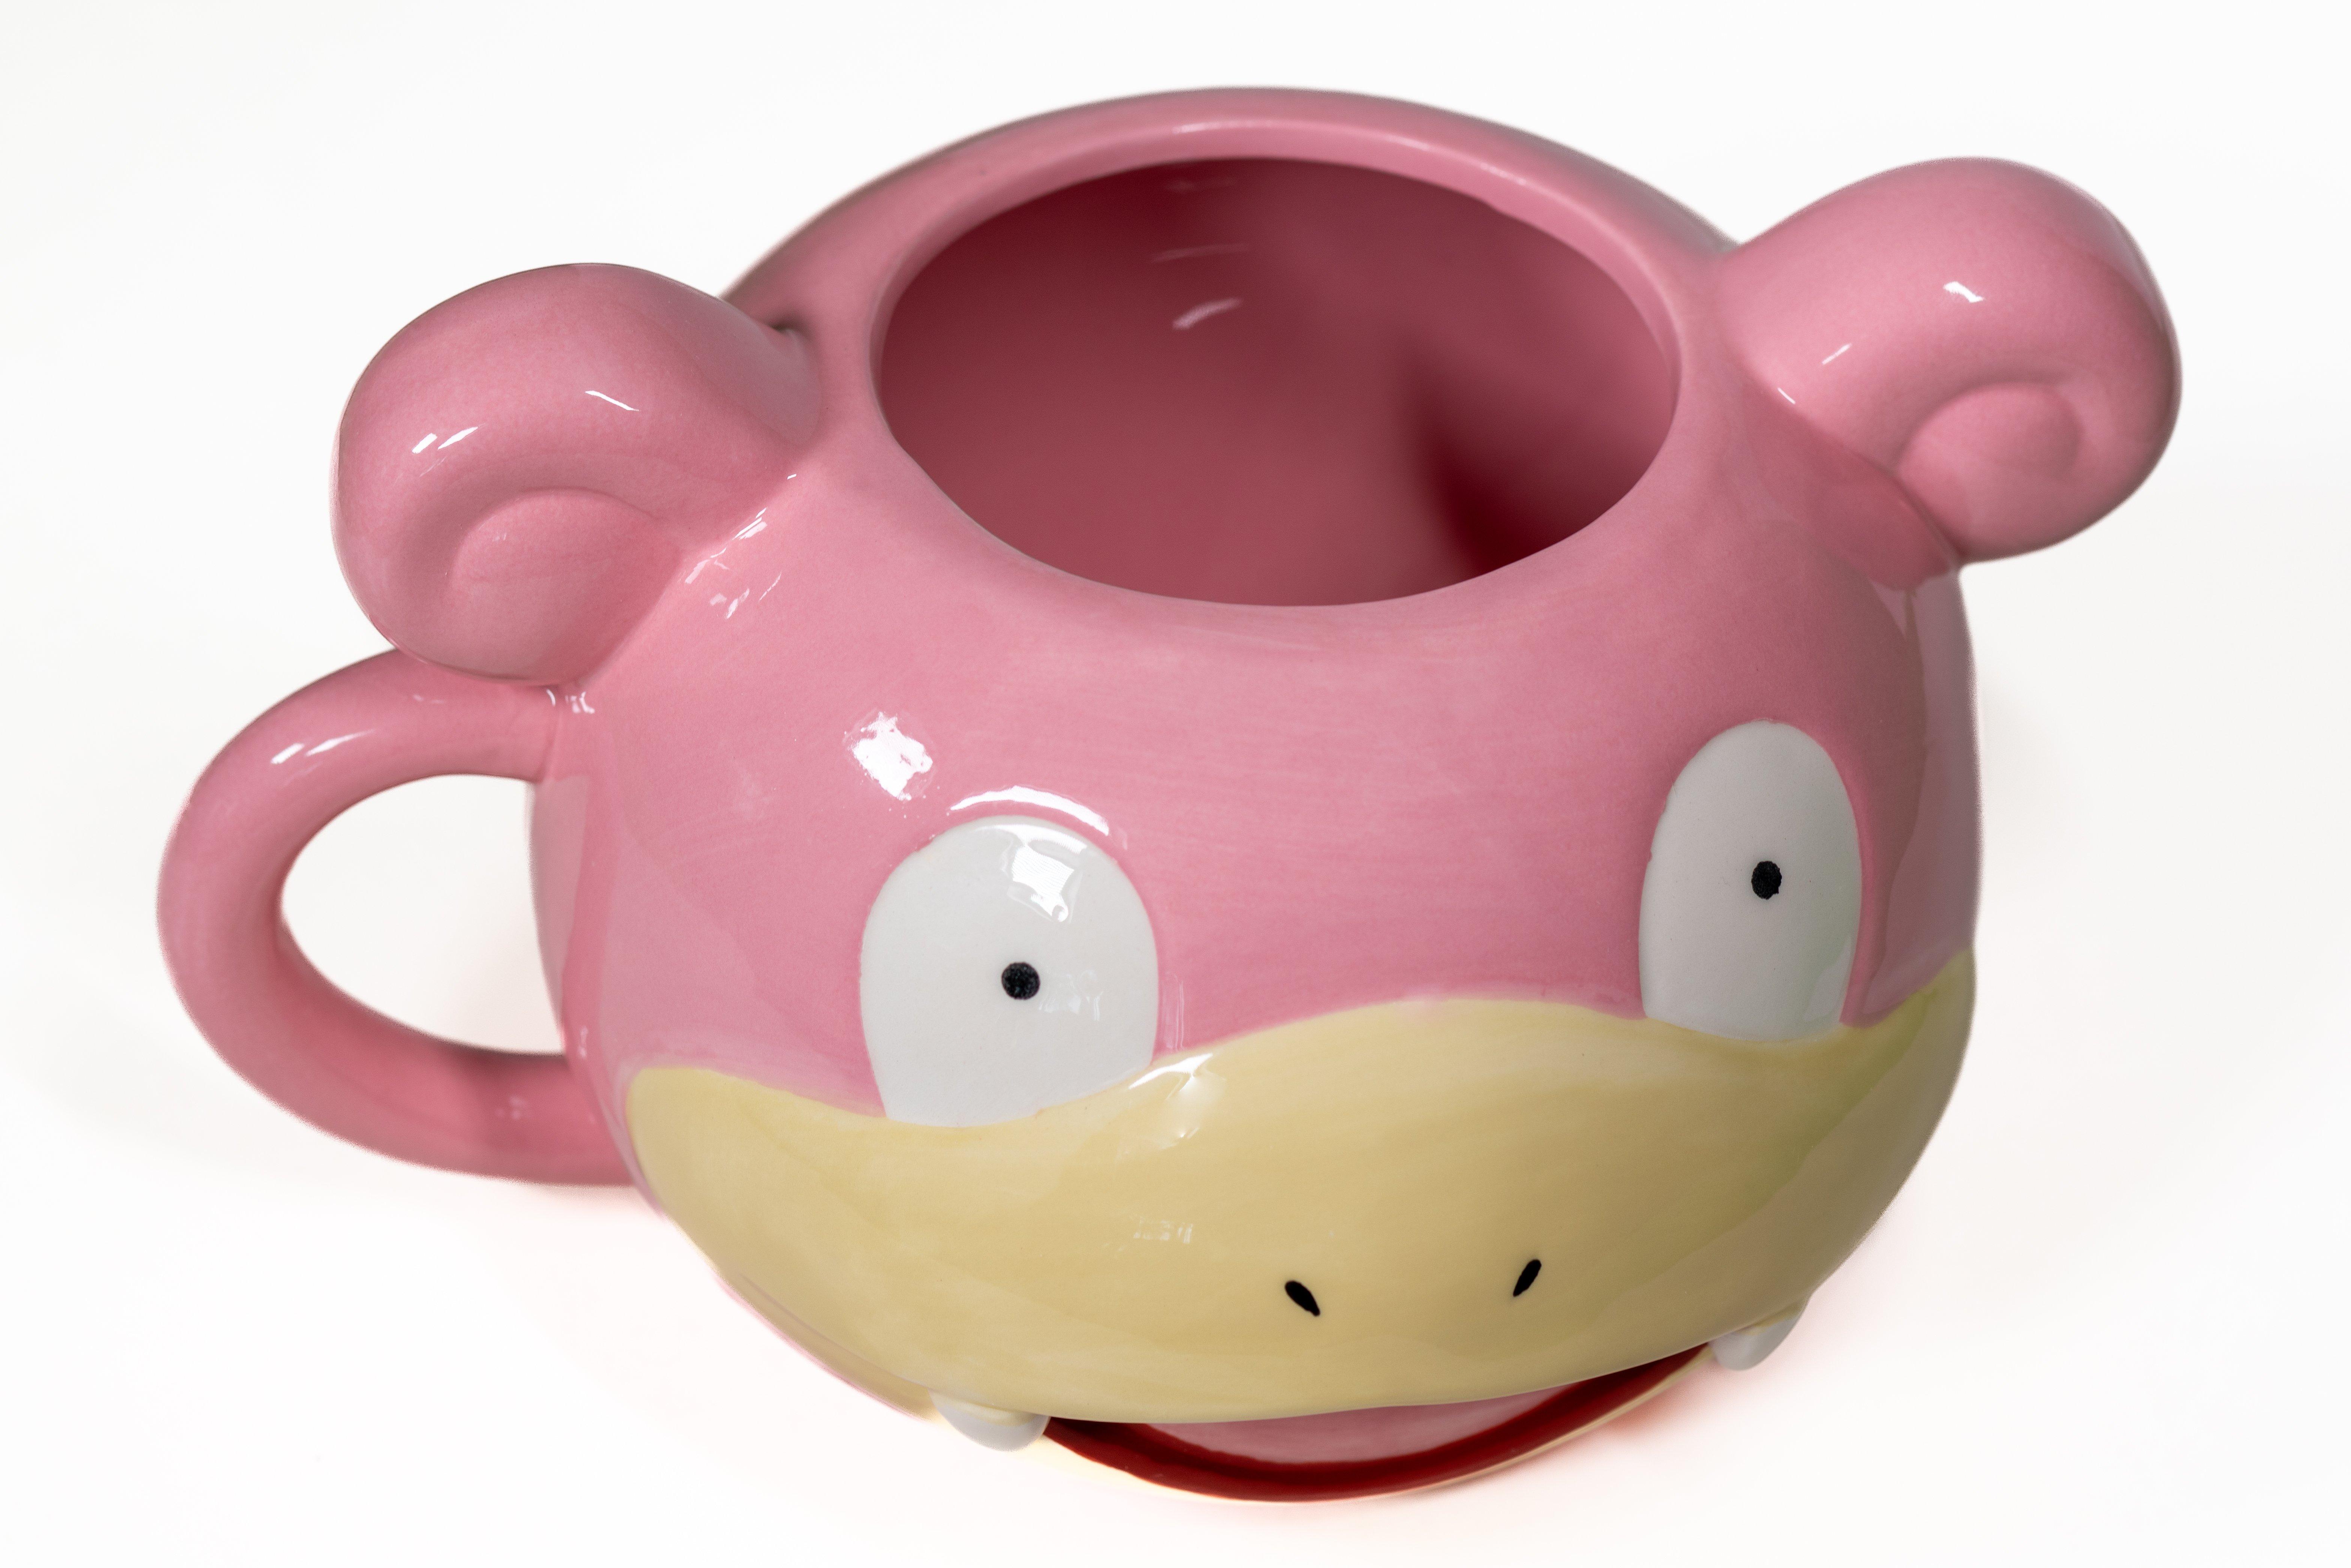 Coffee Mugs Pokemon